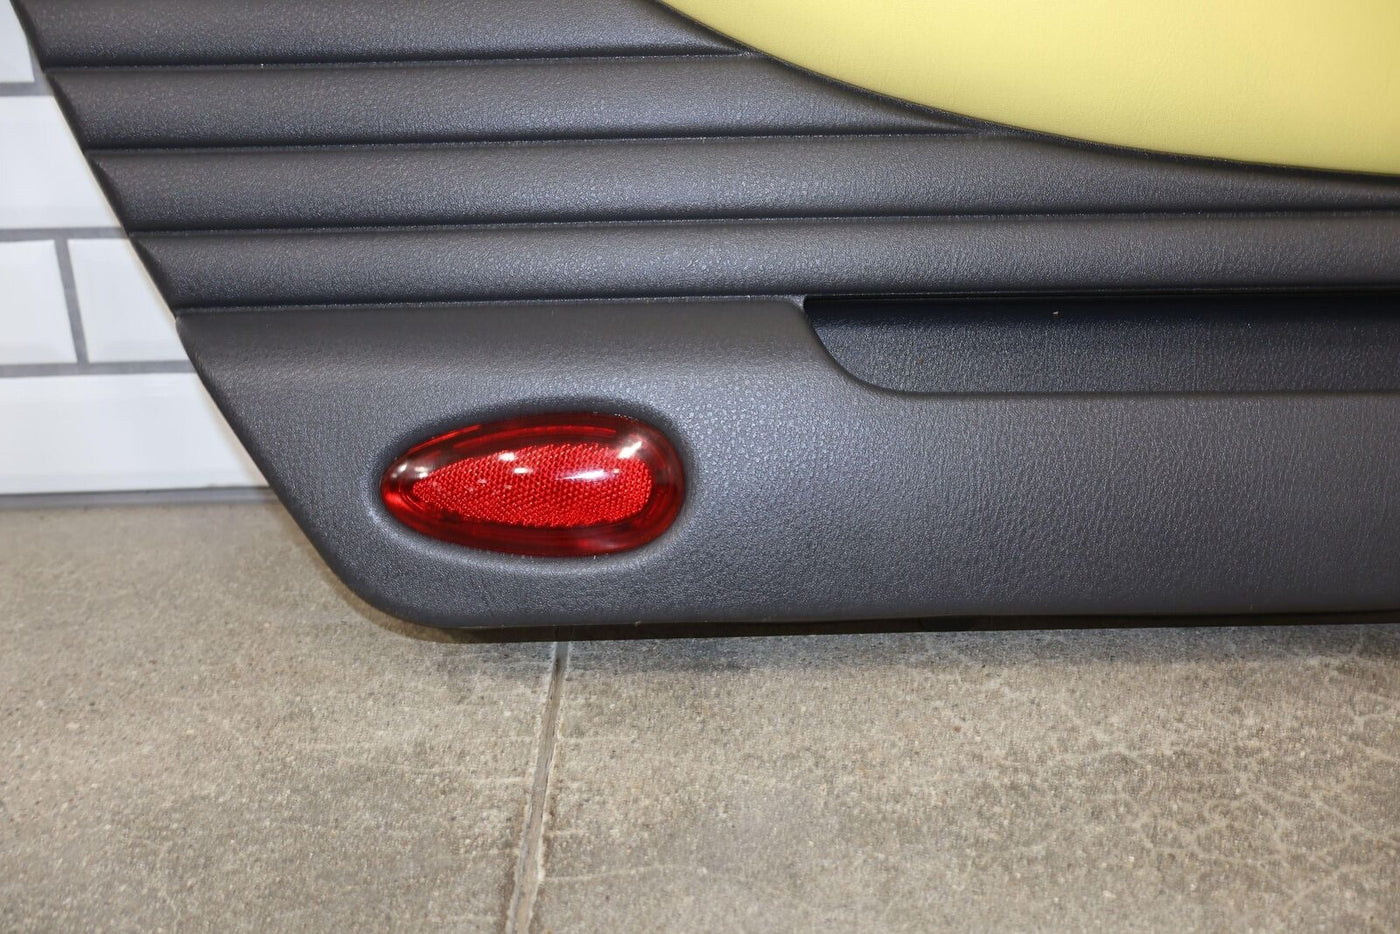 02-05 Ford Thunderbird Left LH Interior Door Trim Panel (Yellow/Black) Leather